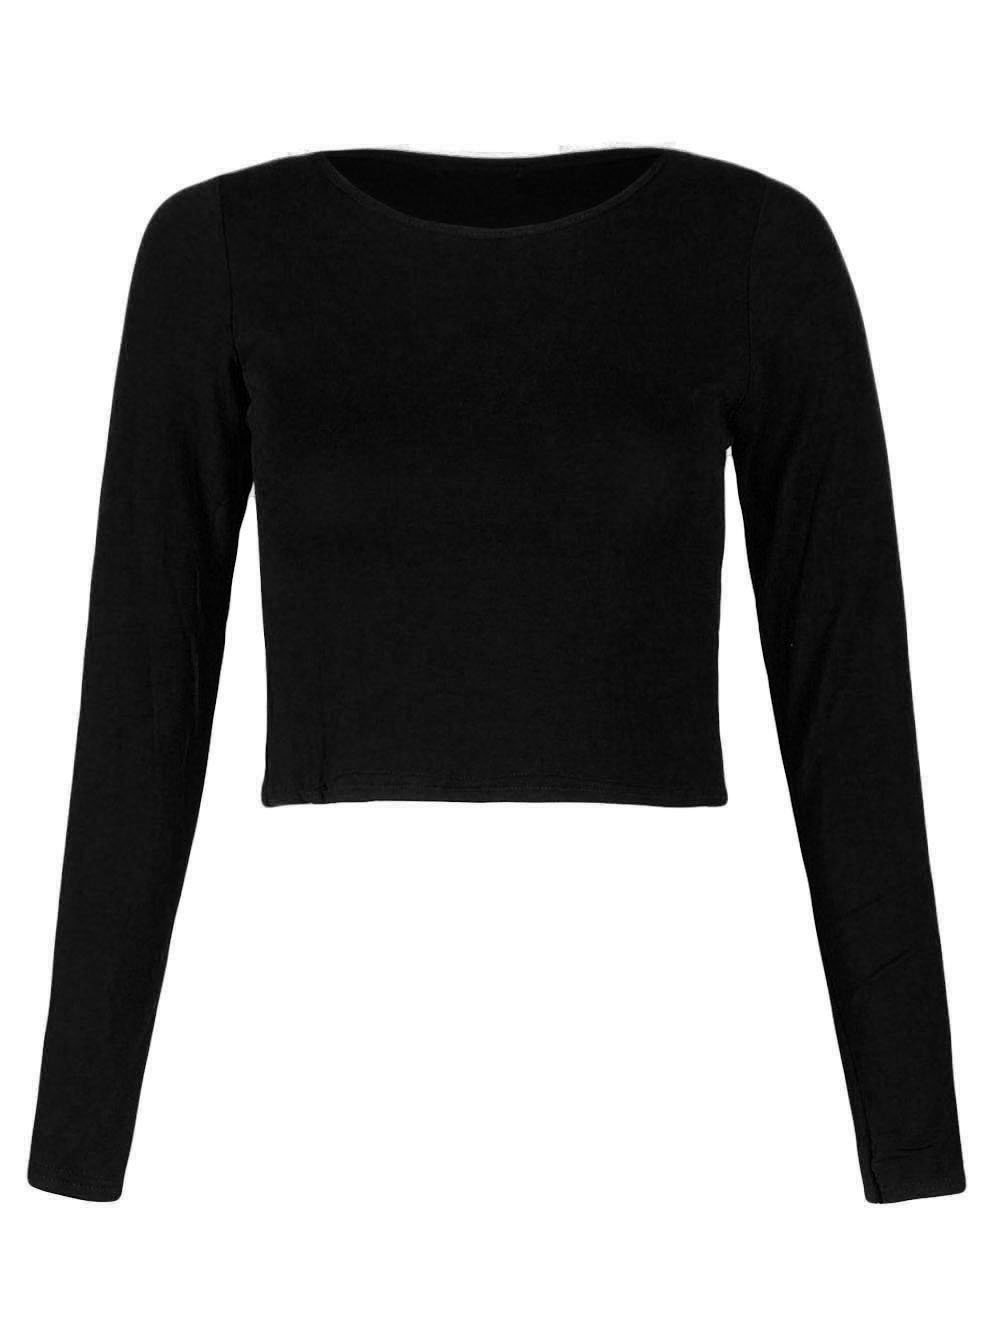 Black Long Sleeve Plain Crop Tshirt Top - ClipArt Best - ClipArt Best